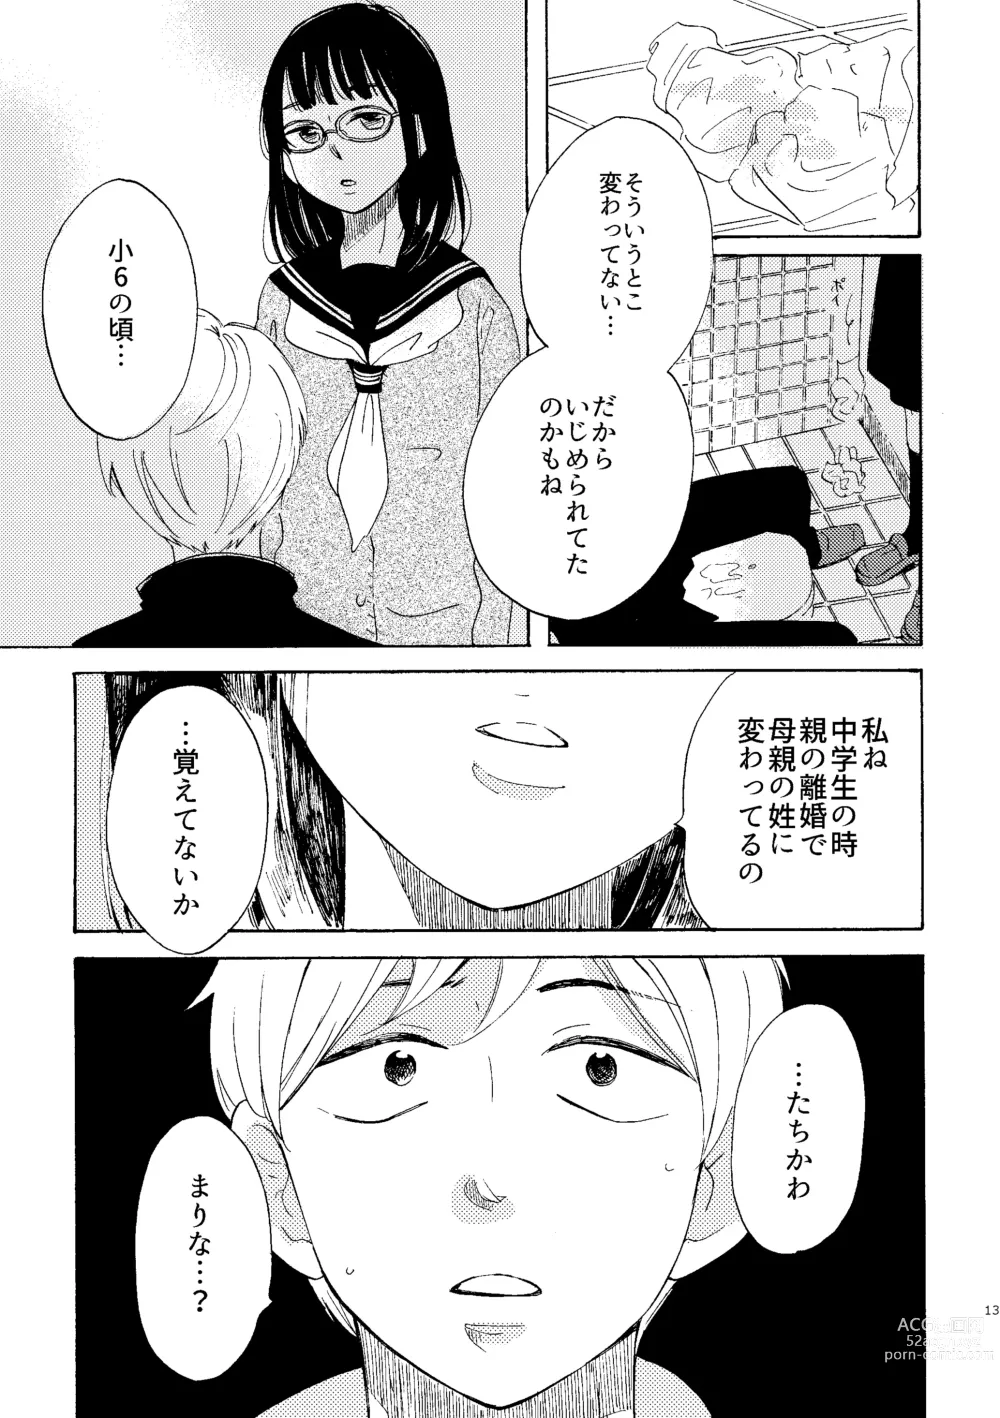 Page 13 of doujinshi Ibitsu na Junjou